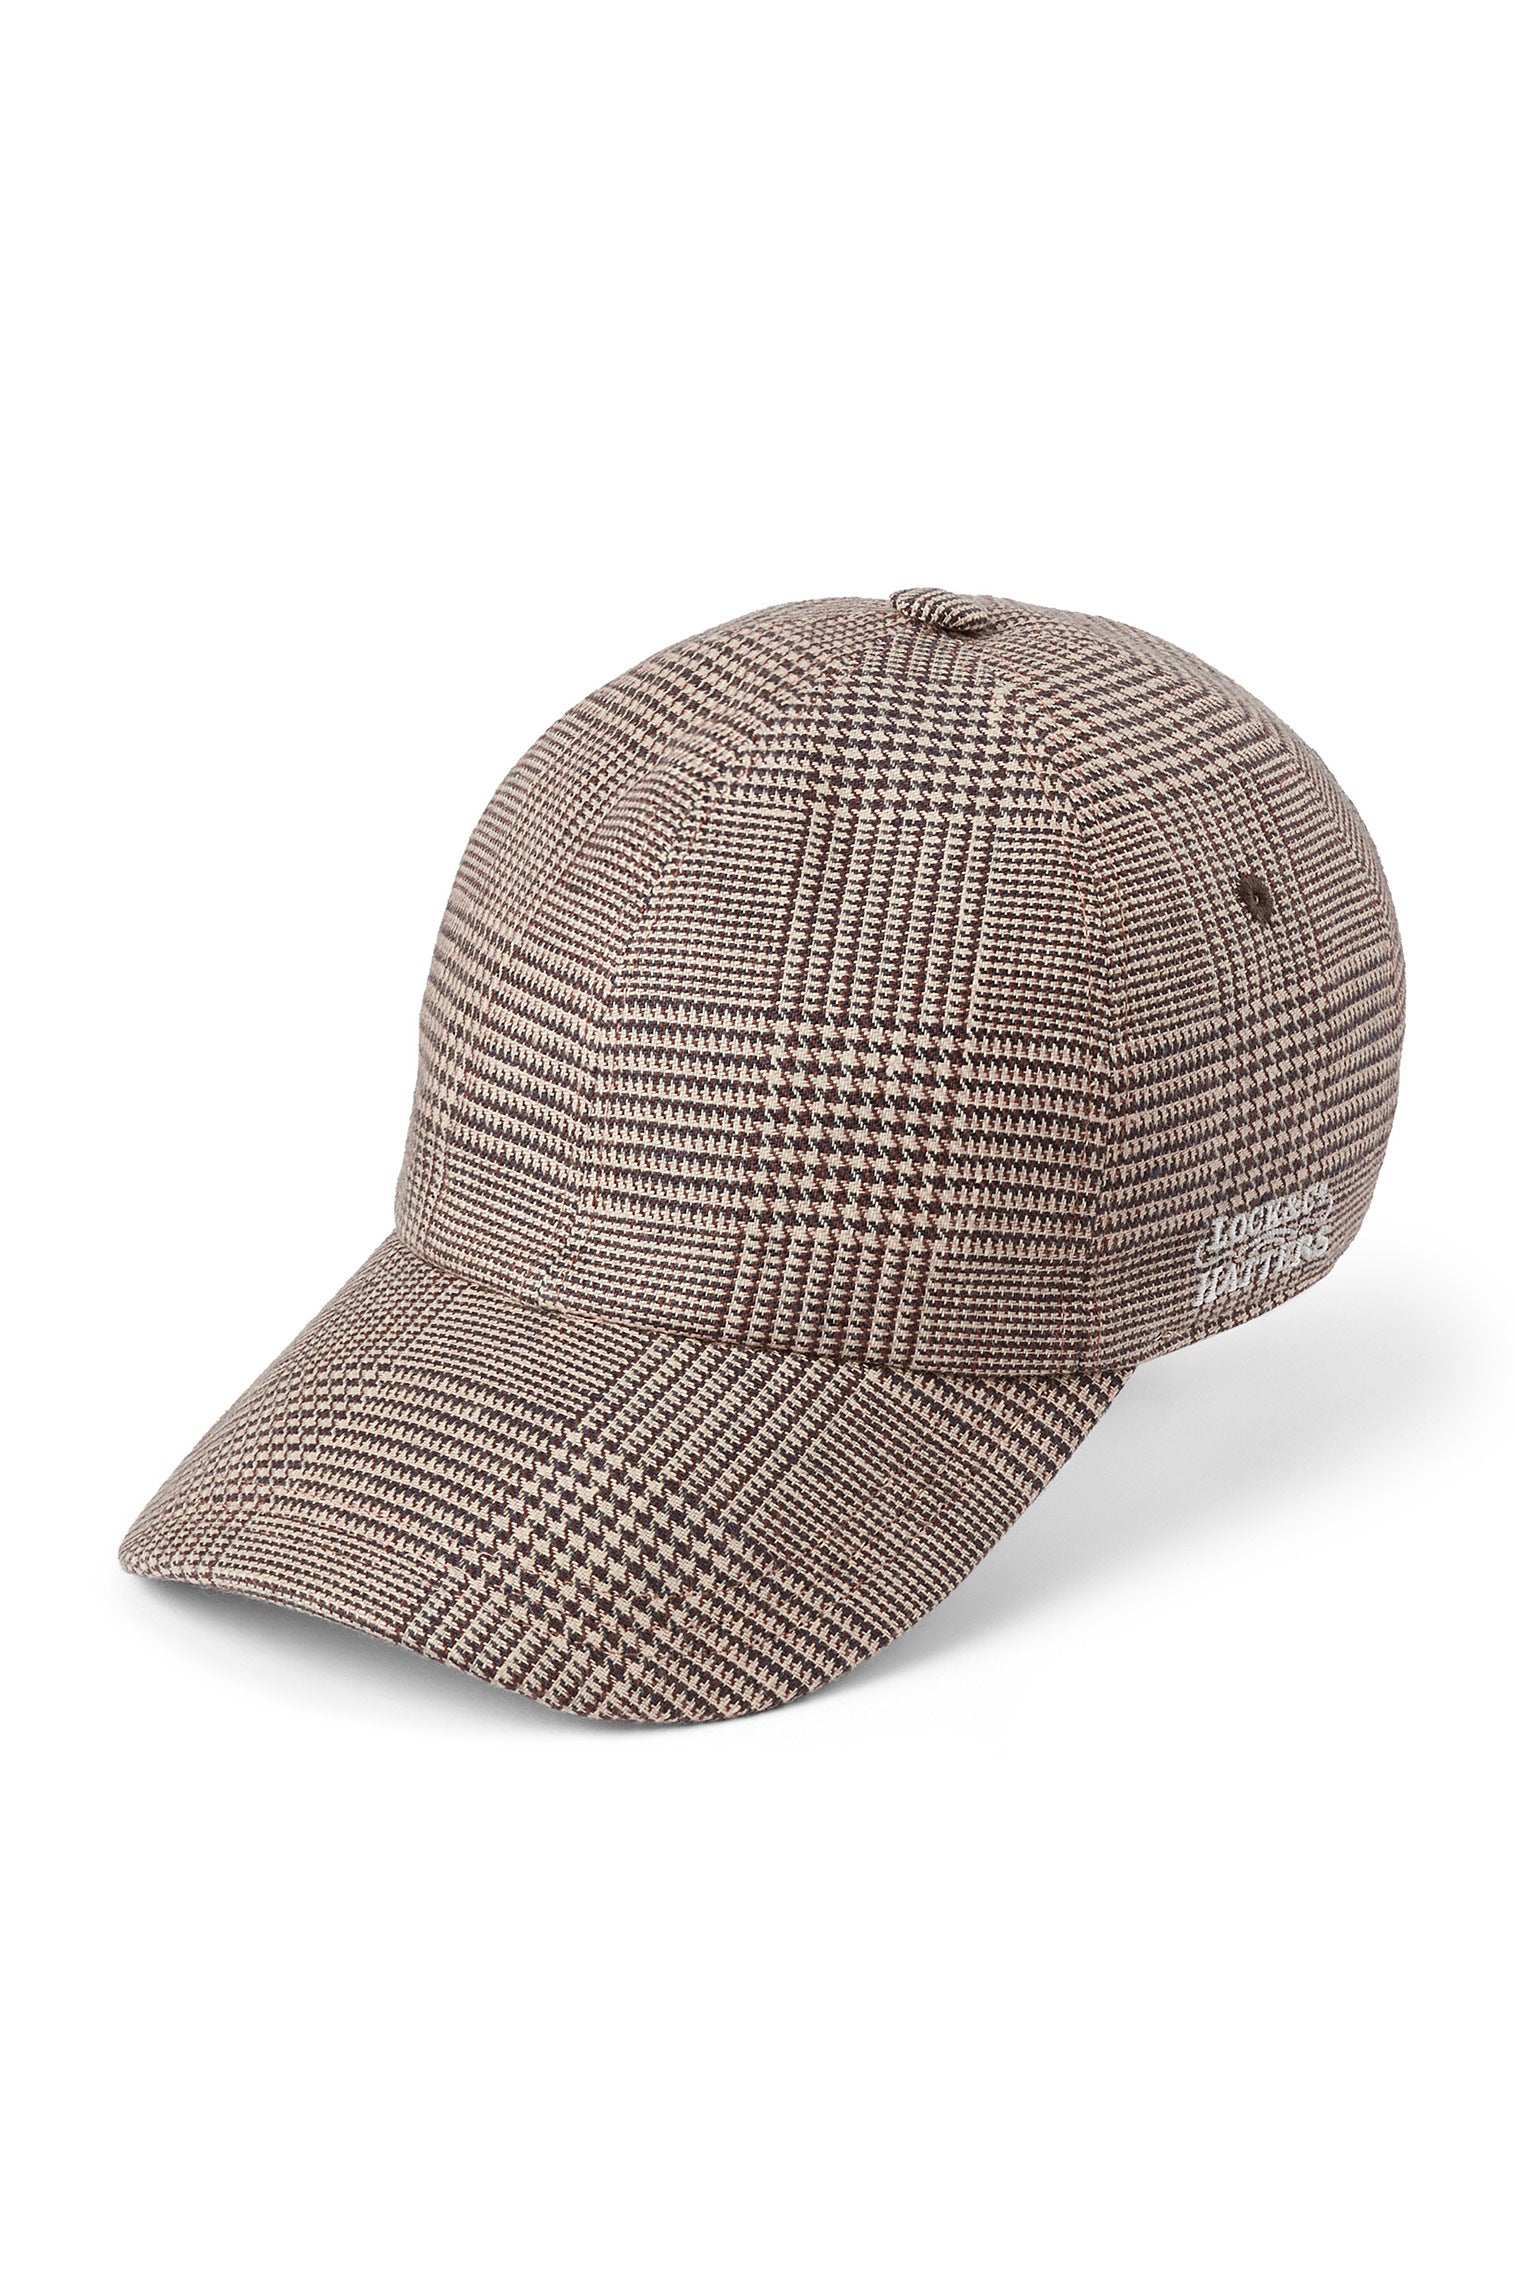 Adjustable Check Baseball Cap - New Season Men's Hats - Lock & Co. Hatters London UK